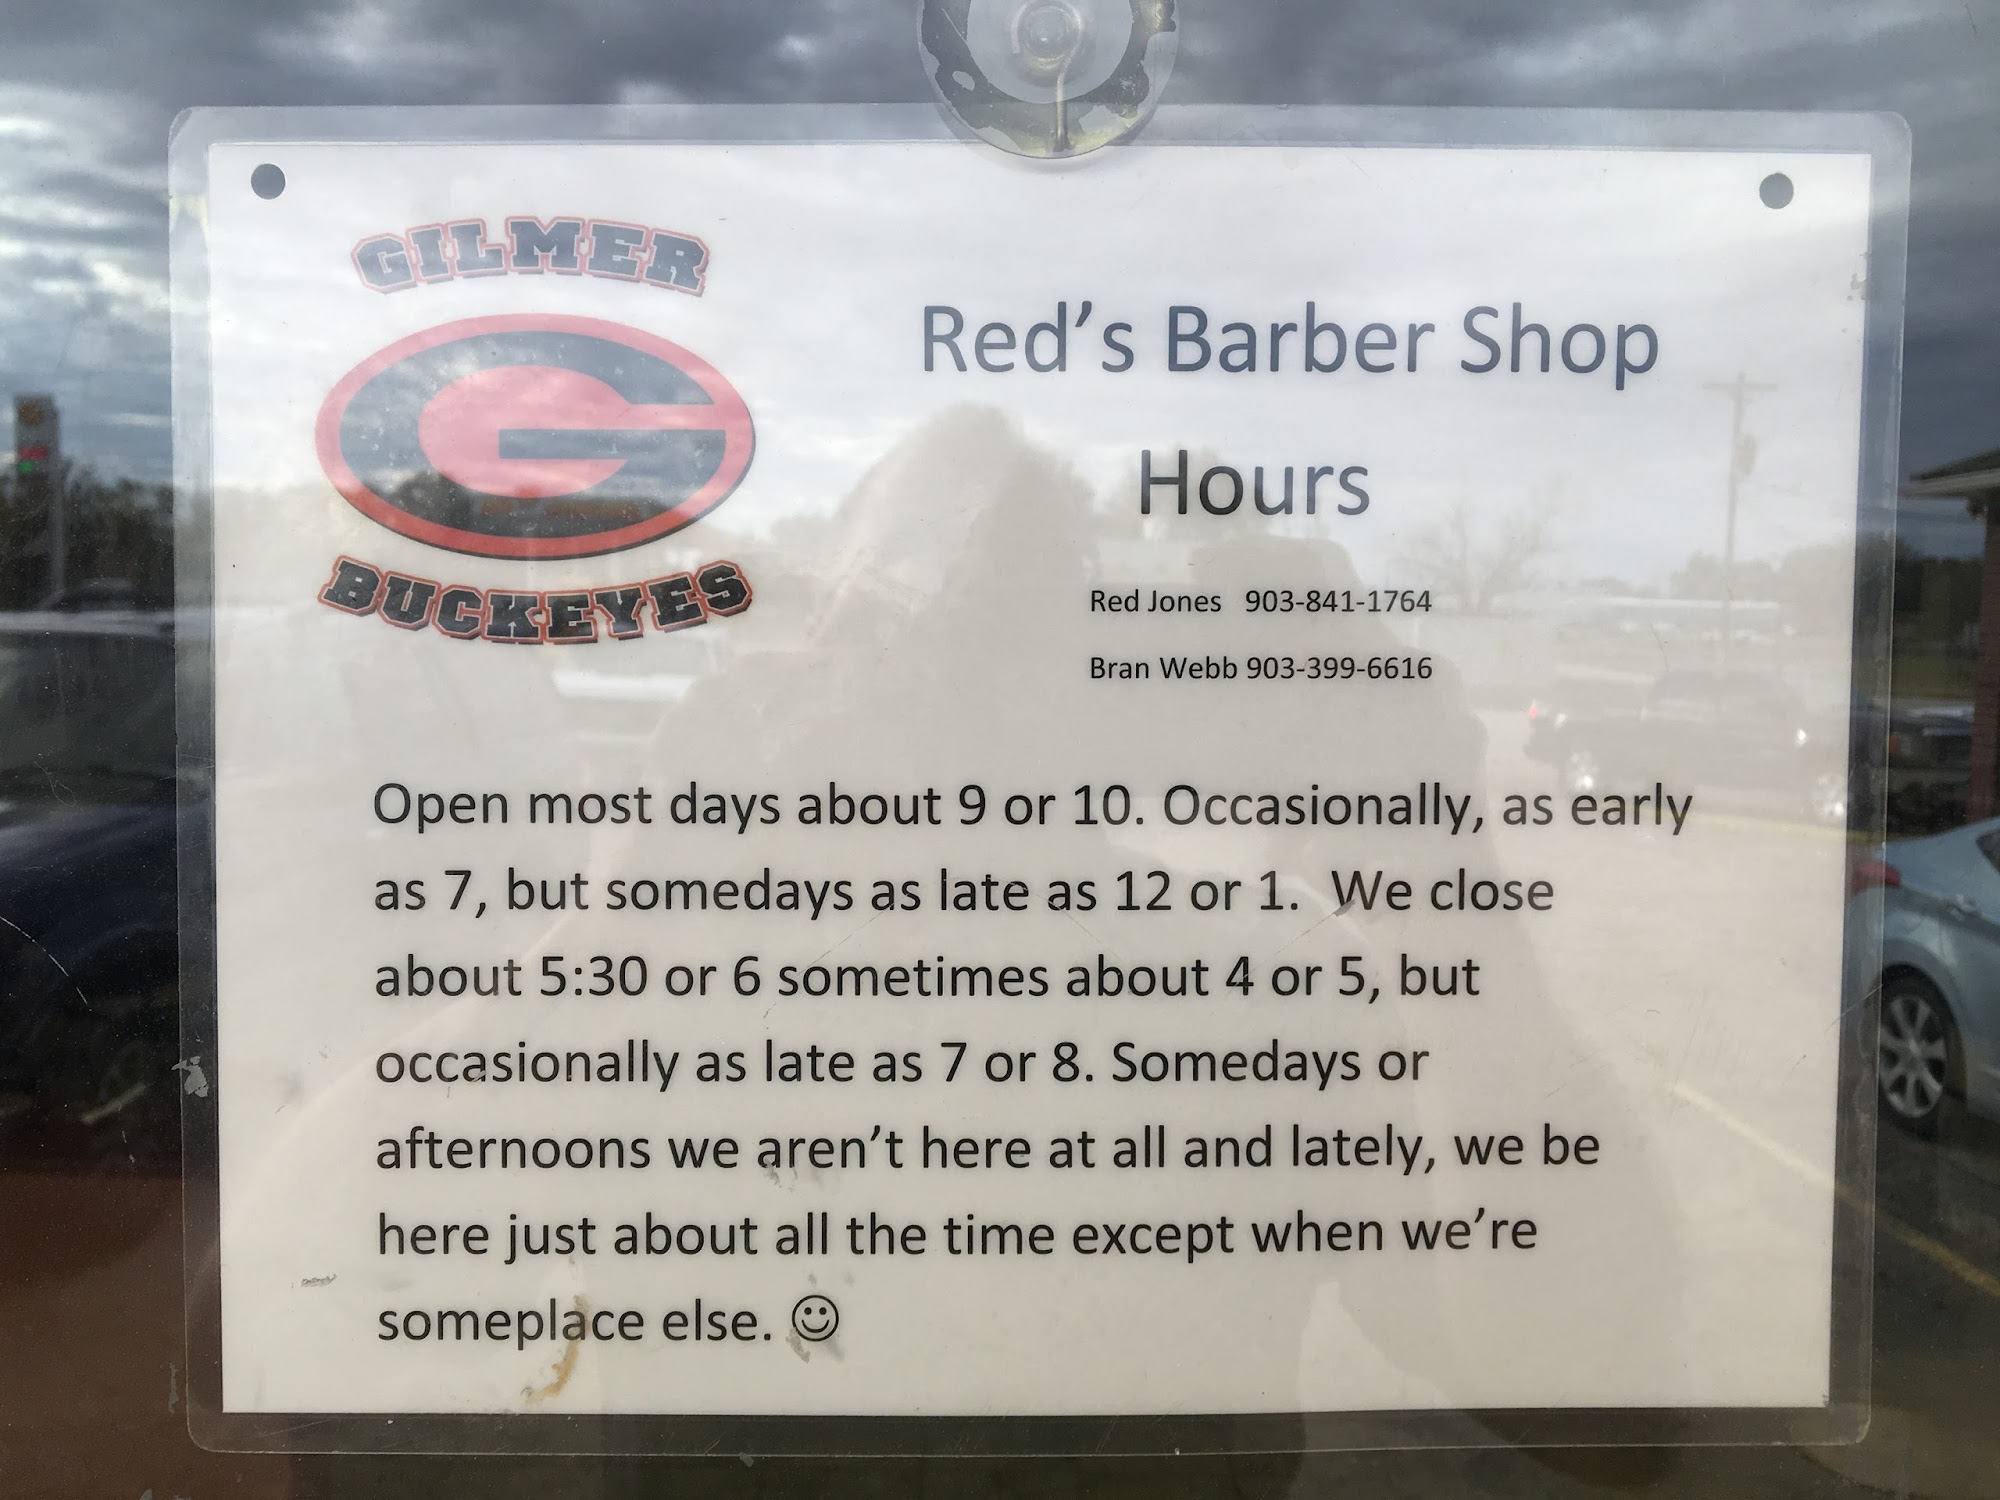 Red's Barber Shop 1420 US Hwy 271 N ste d, Gilmer Texas 75644